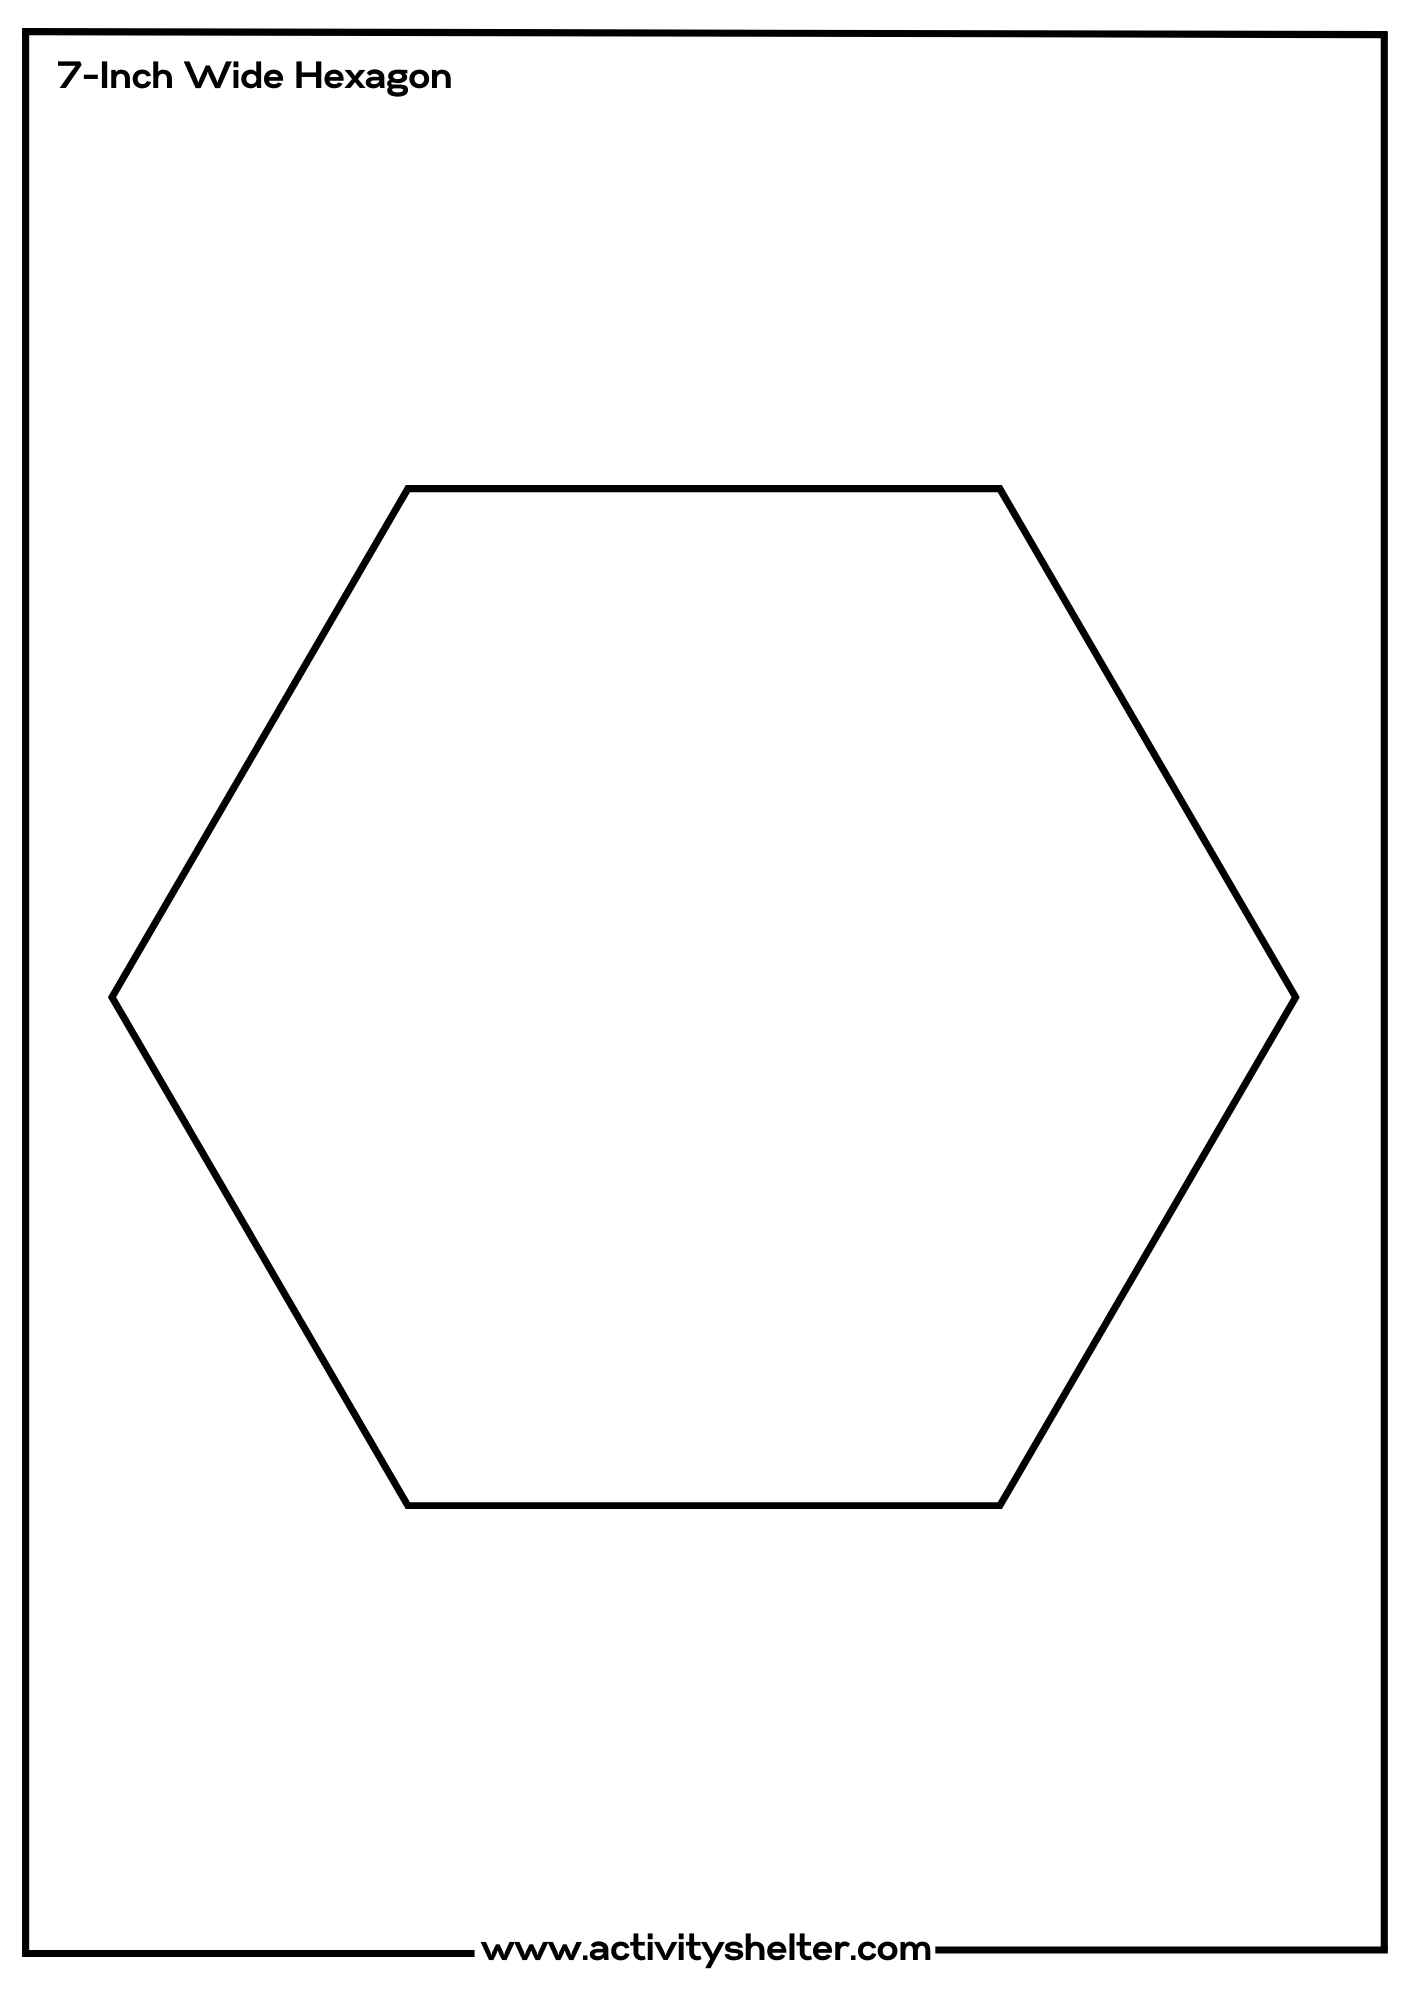 Hexagon Template 7-Inch Wide